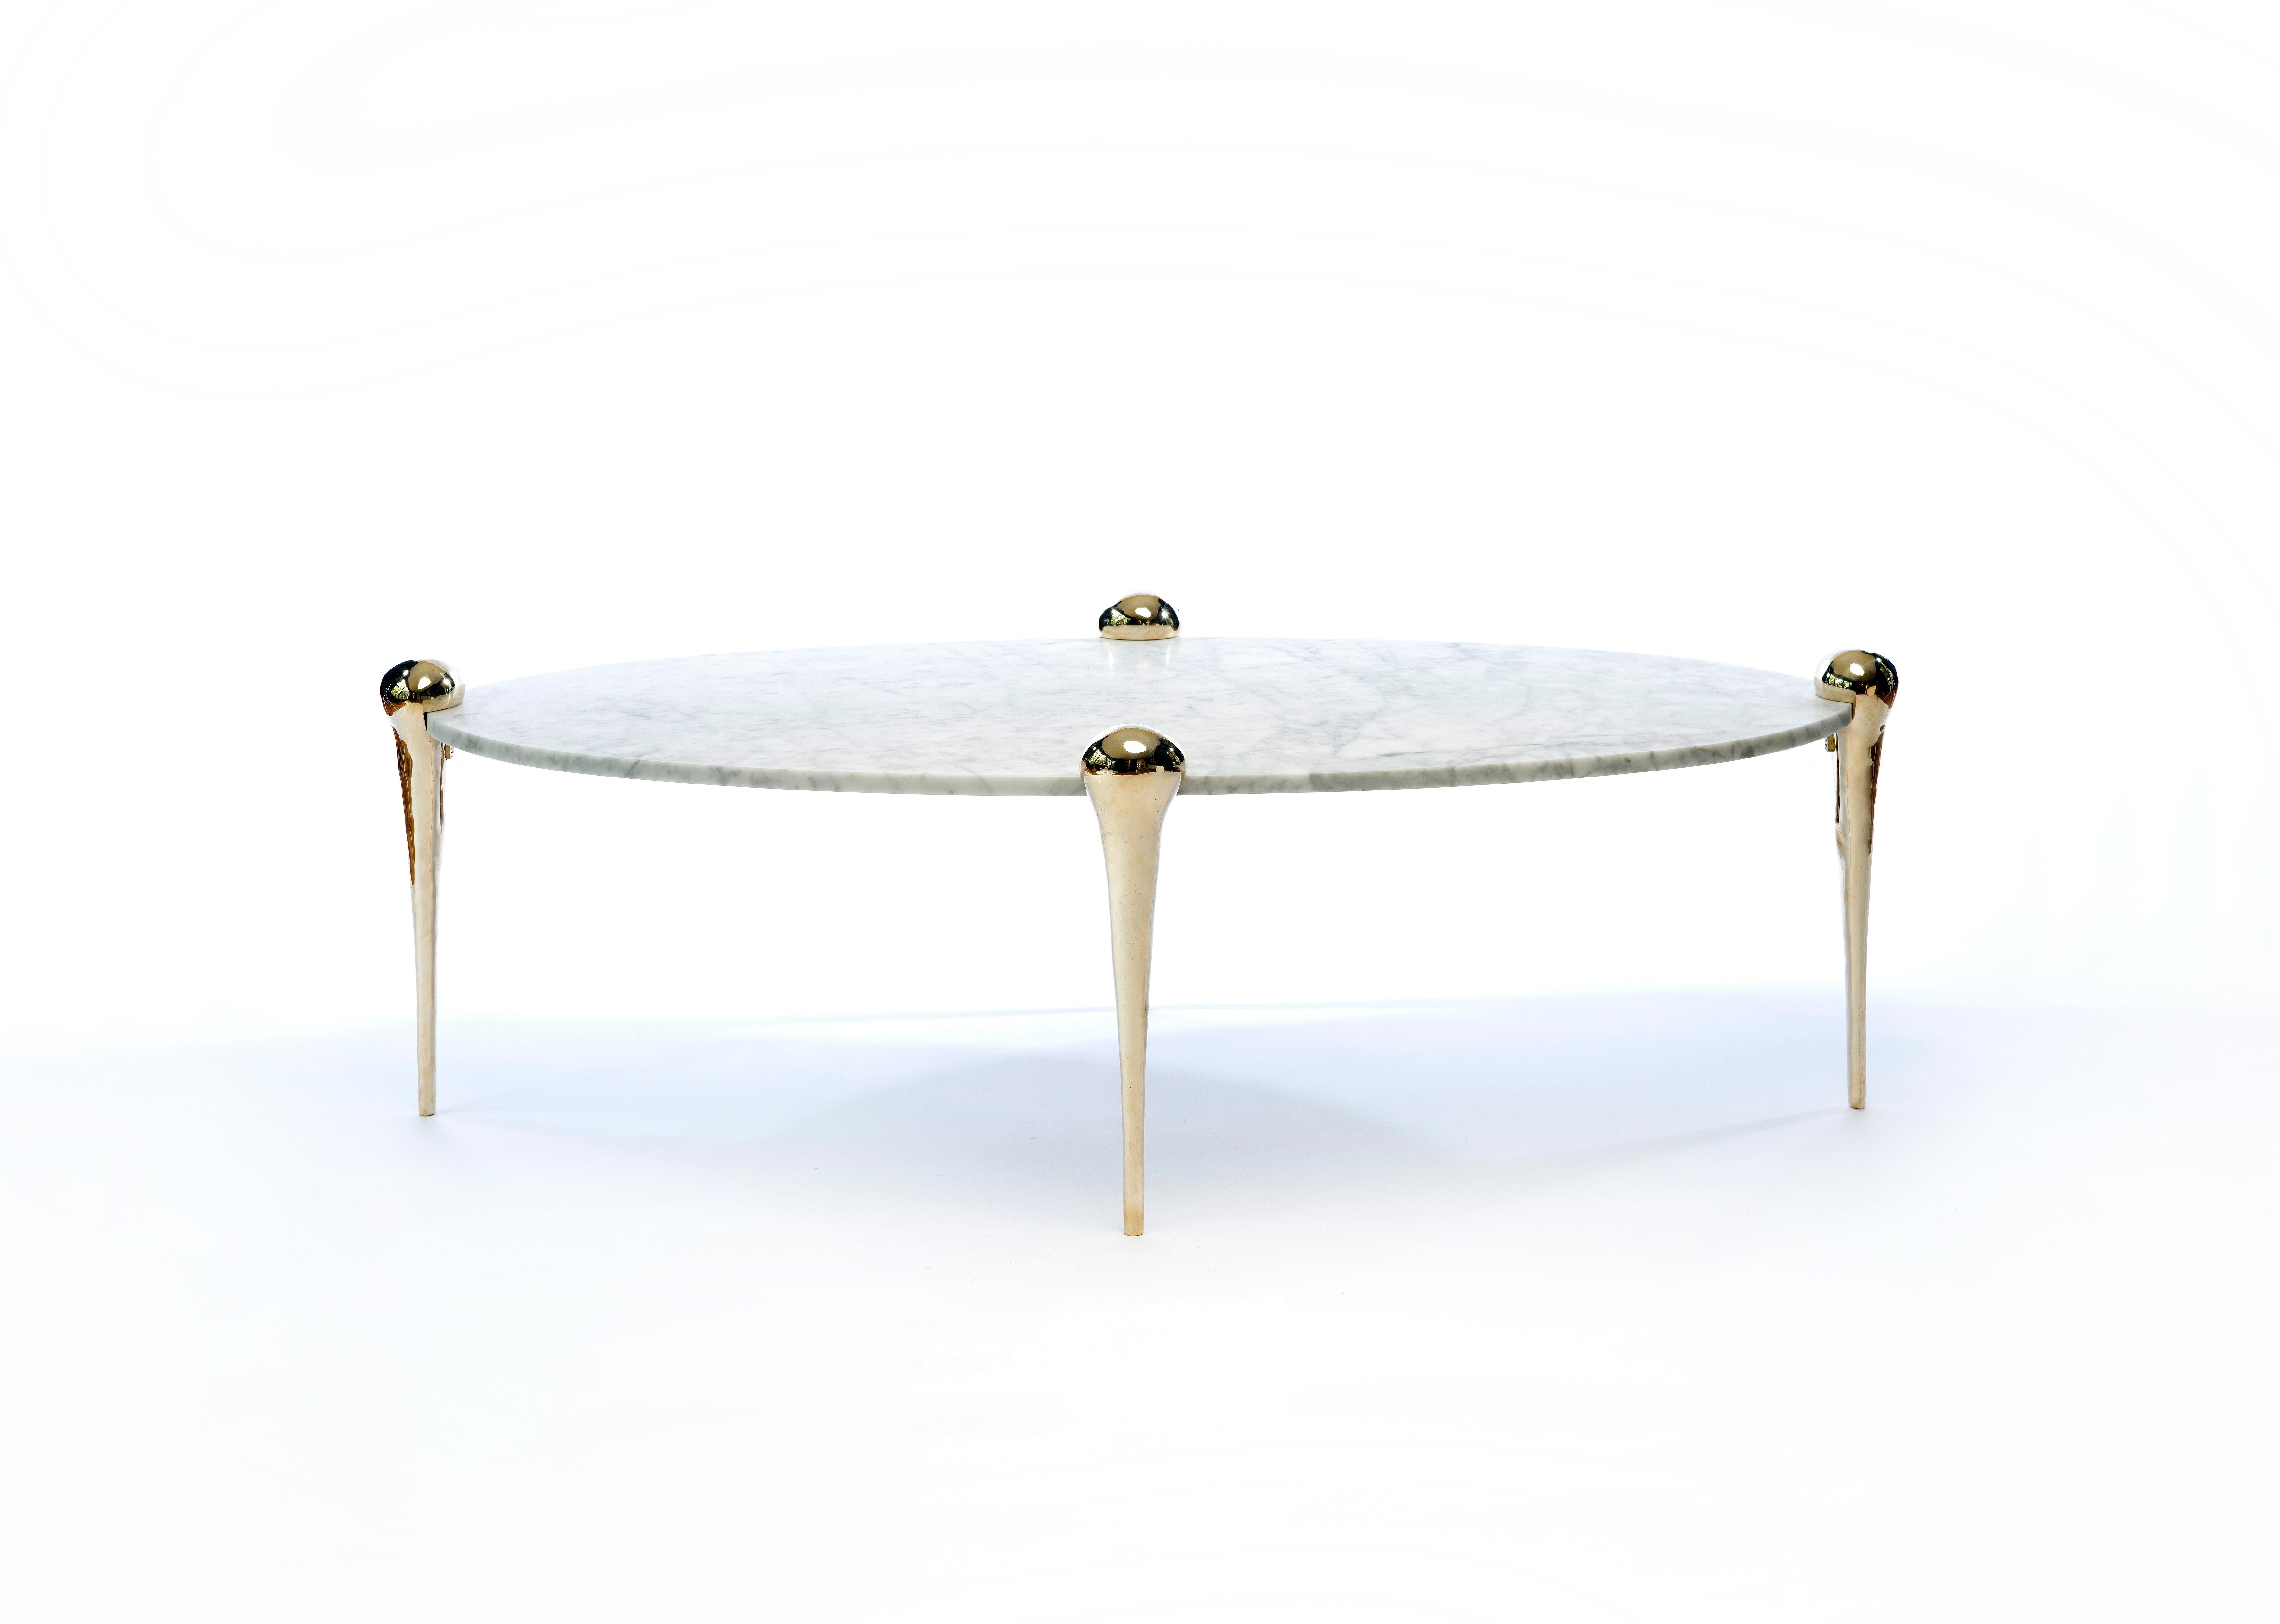 Carrara Marble Petra Coffee Table by Konekt Furniture 
Dimensions: 57.5